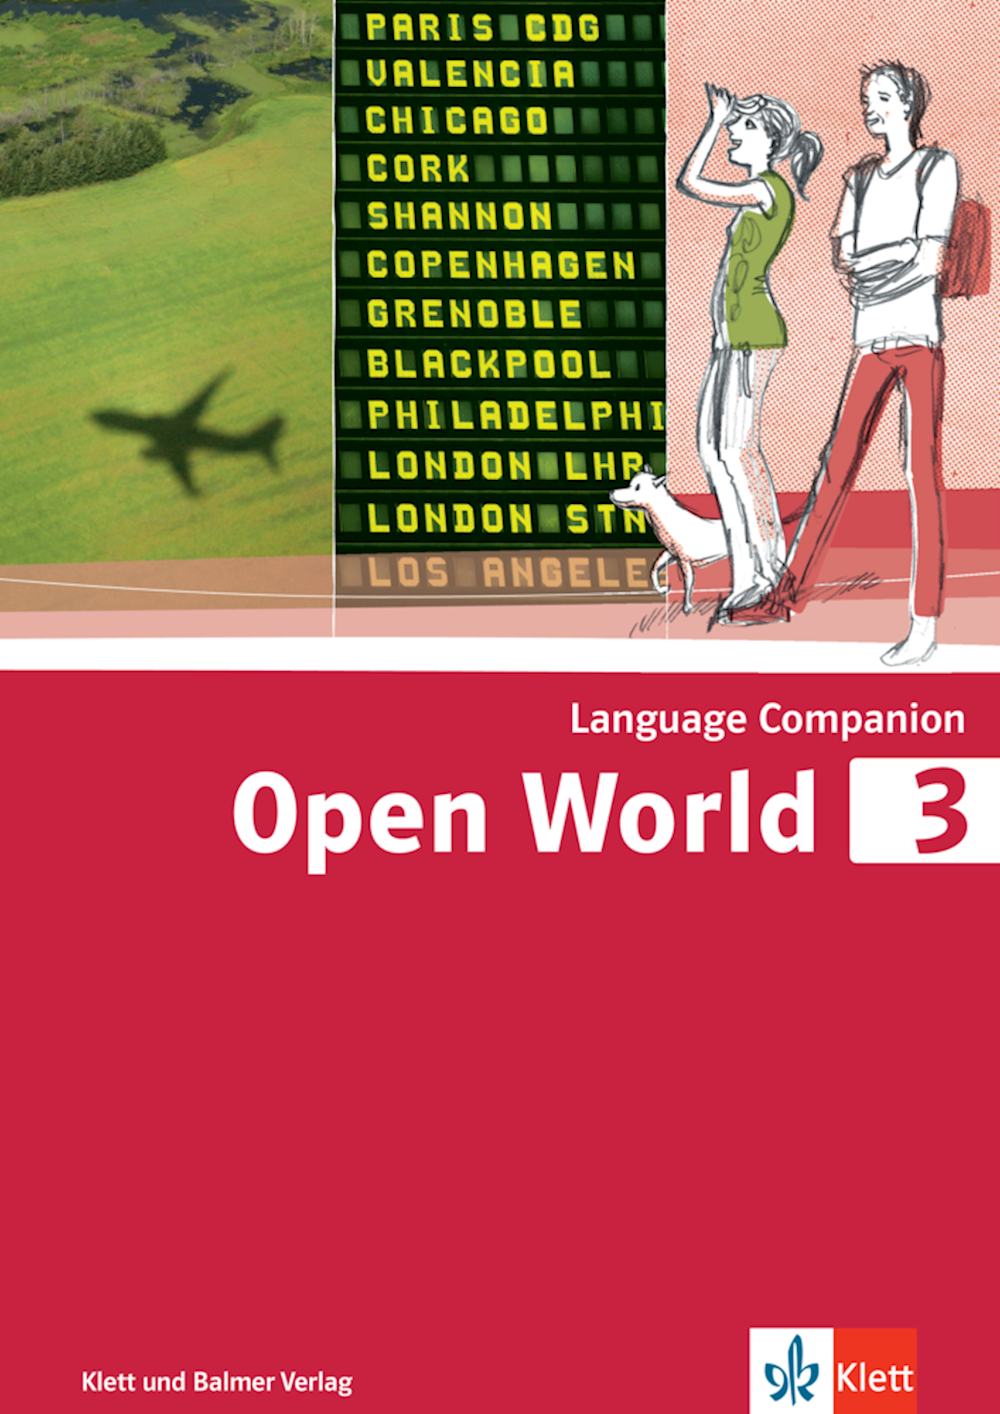 Open World 3, Language Companion 